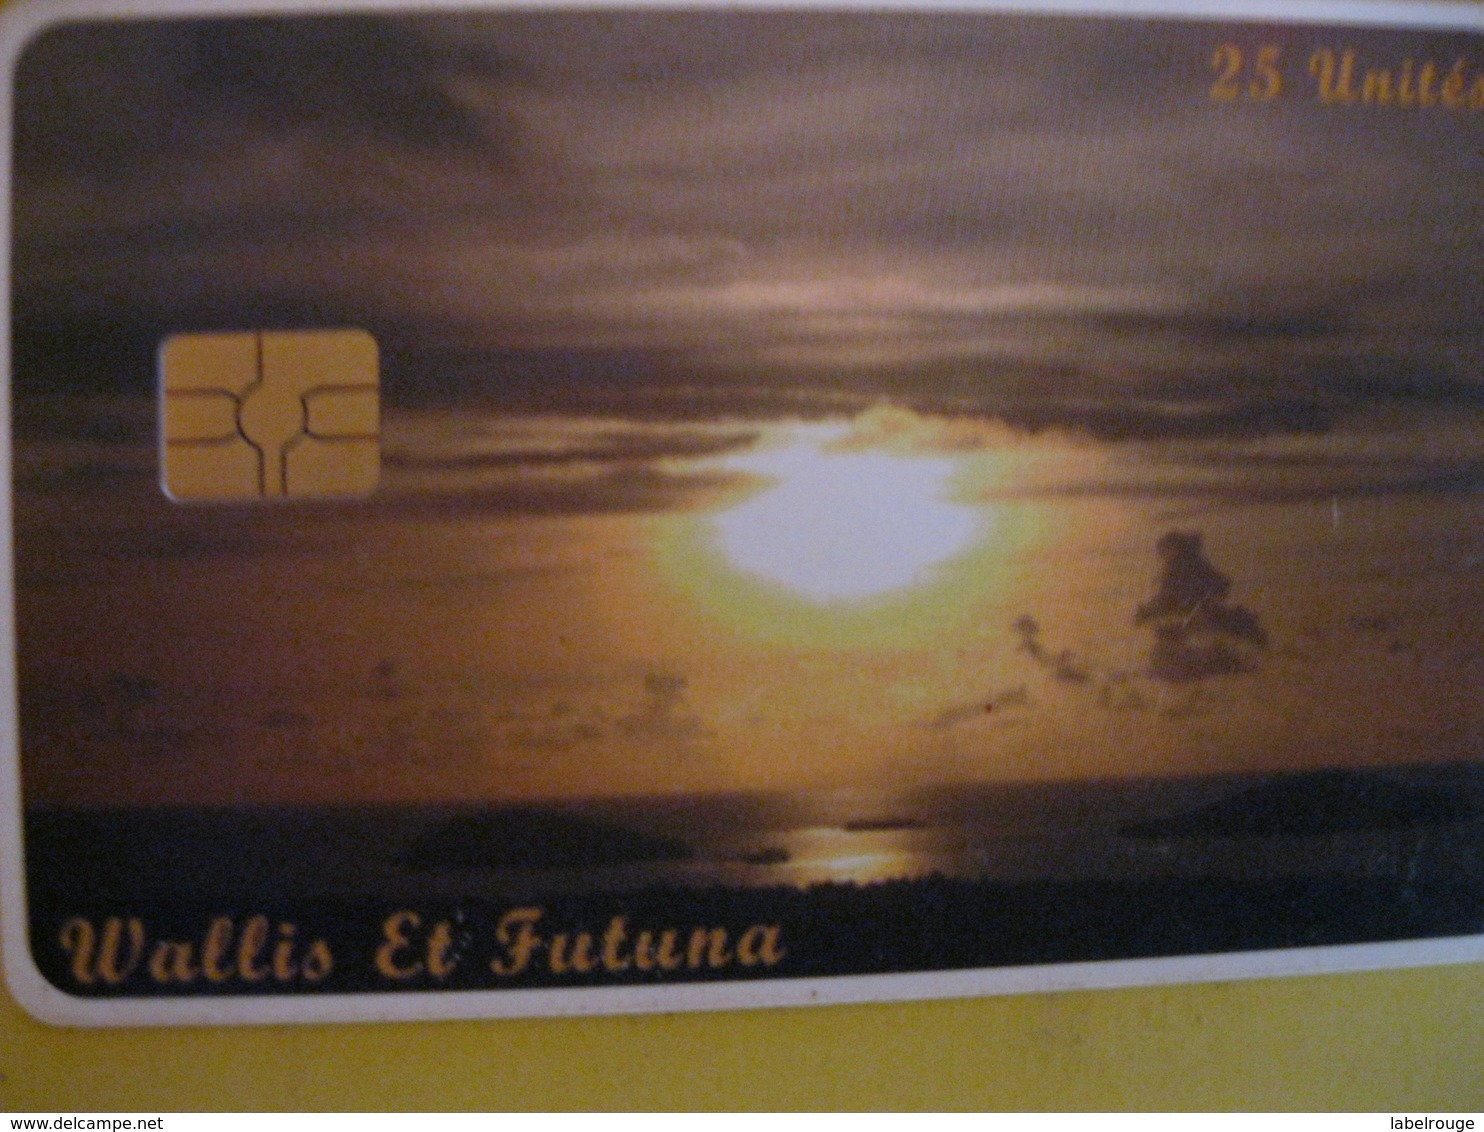 Telecarte De Wallis Et Futuna - Wallis En Futuna